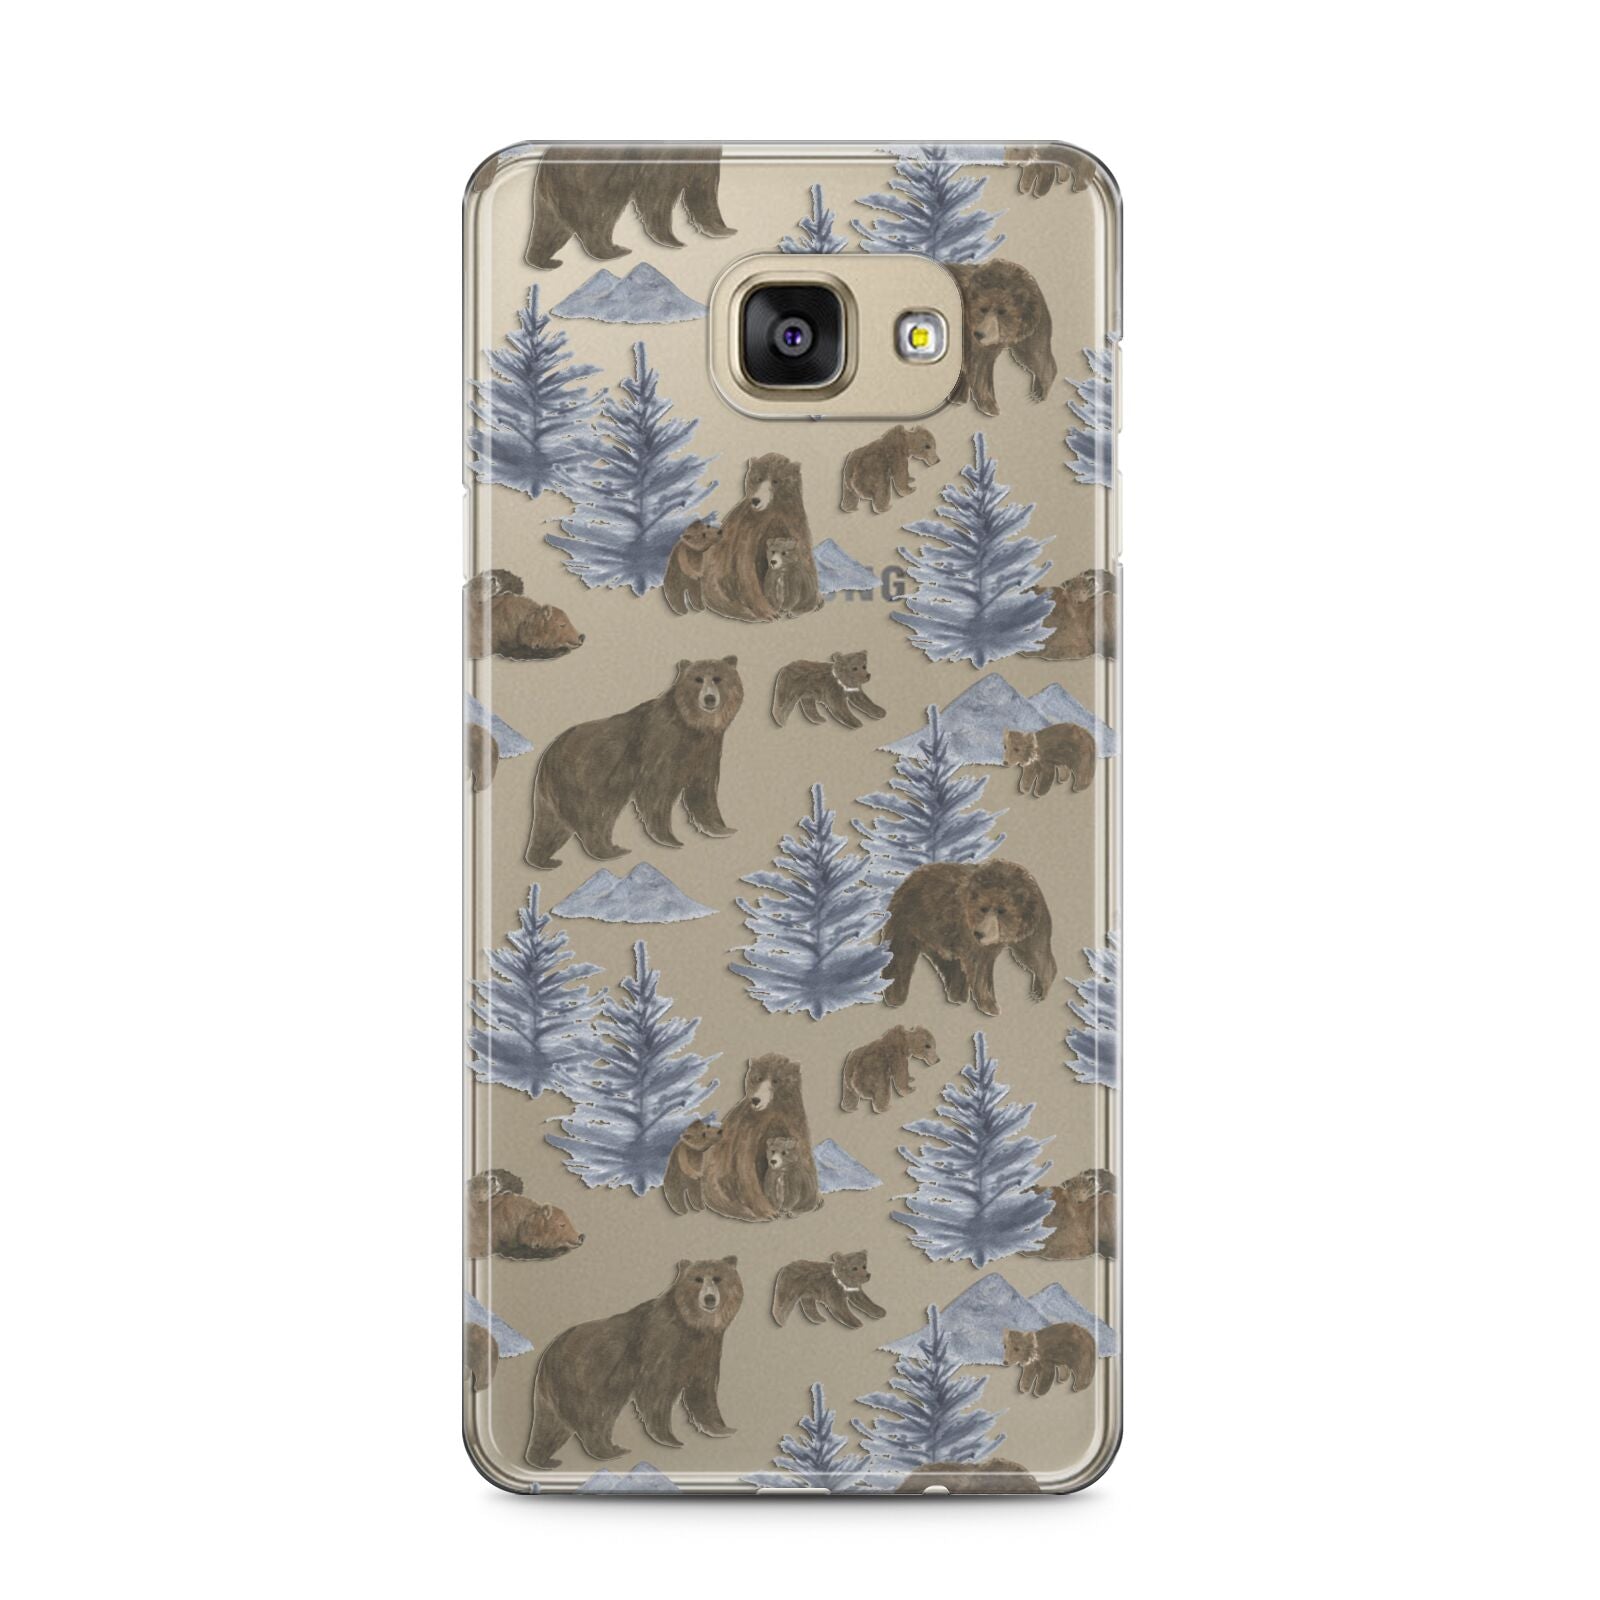 Brown Bear Samsung Galaxy A5 2016 Case on gold phone